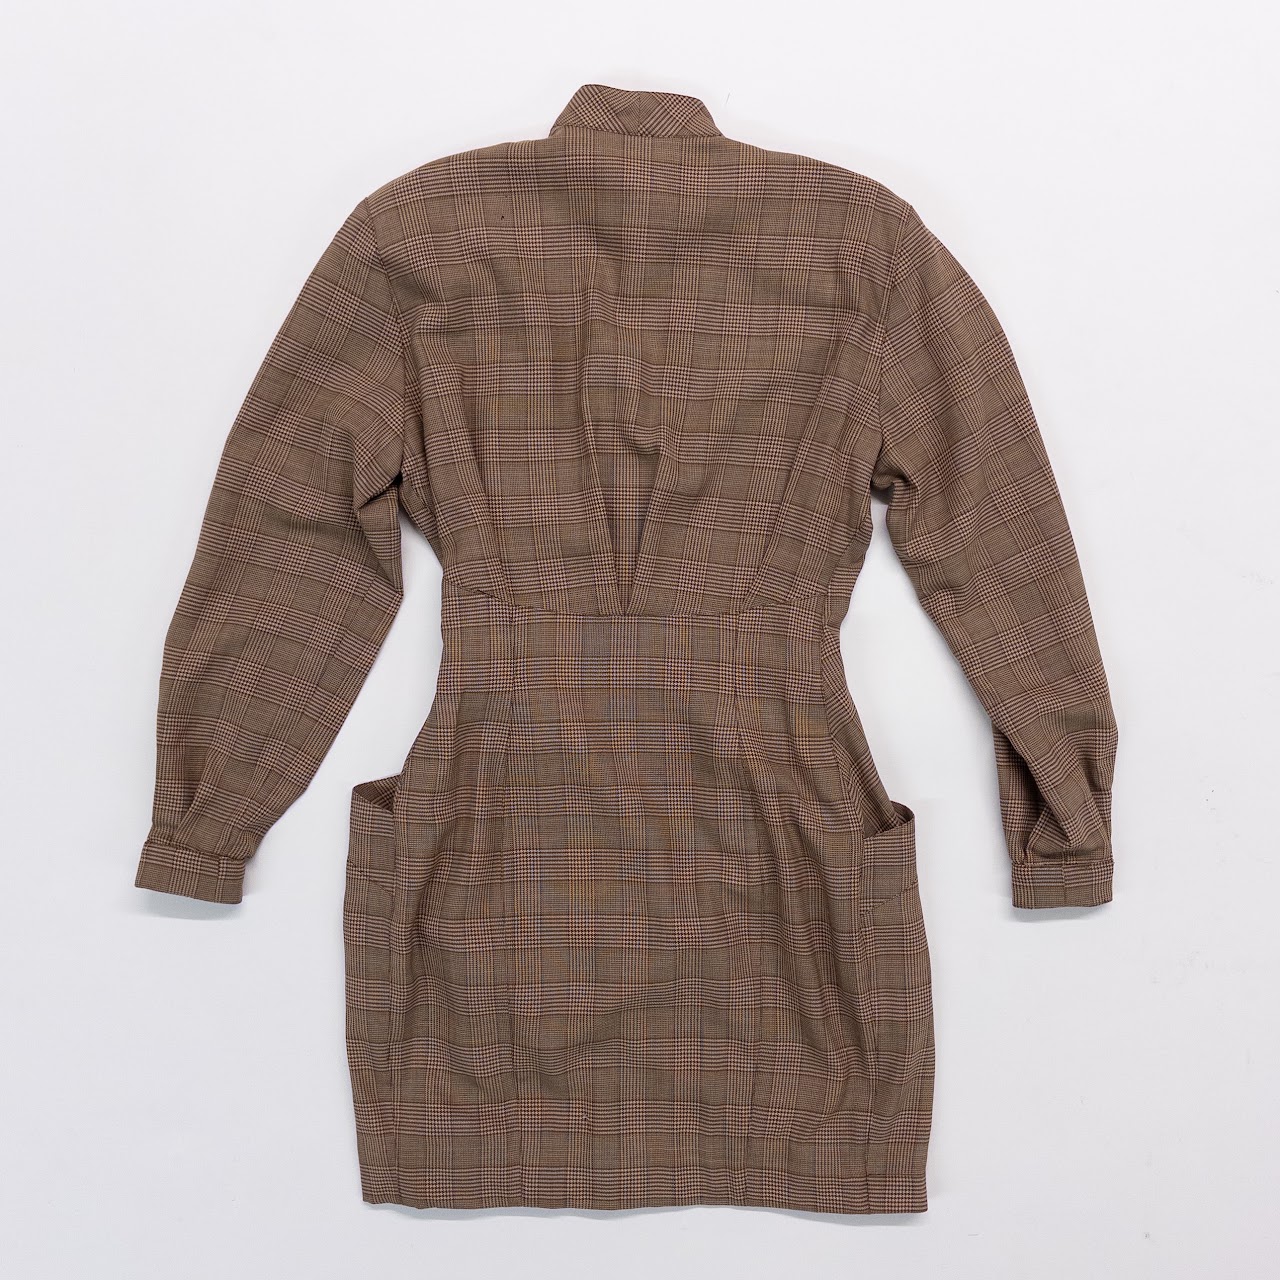 Thierry Mugler Vintage Glen Plaid Jacket